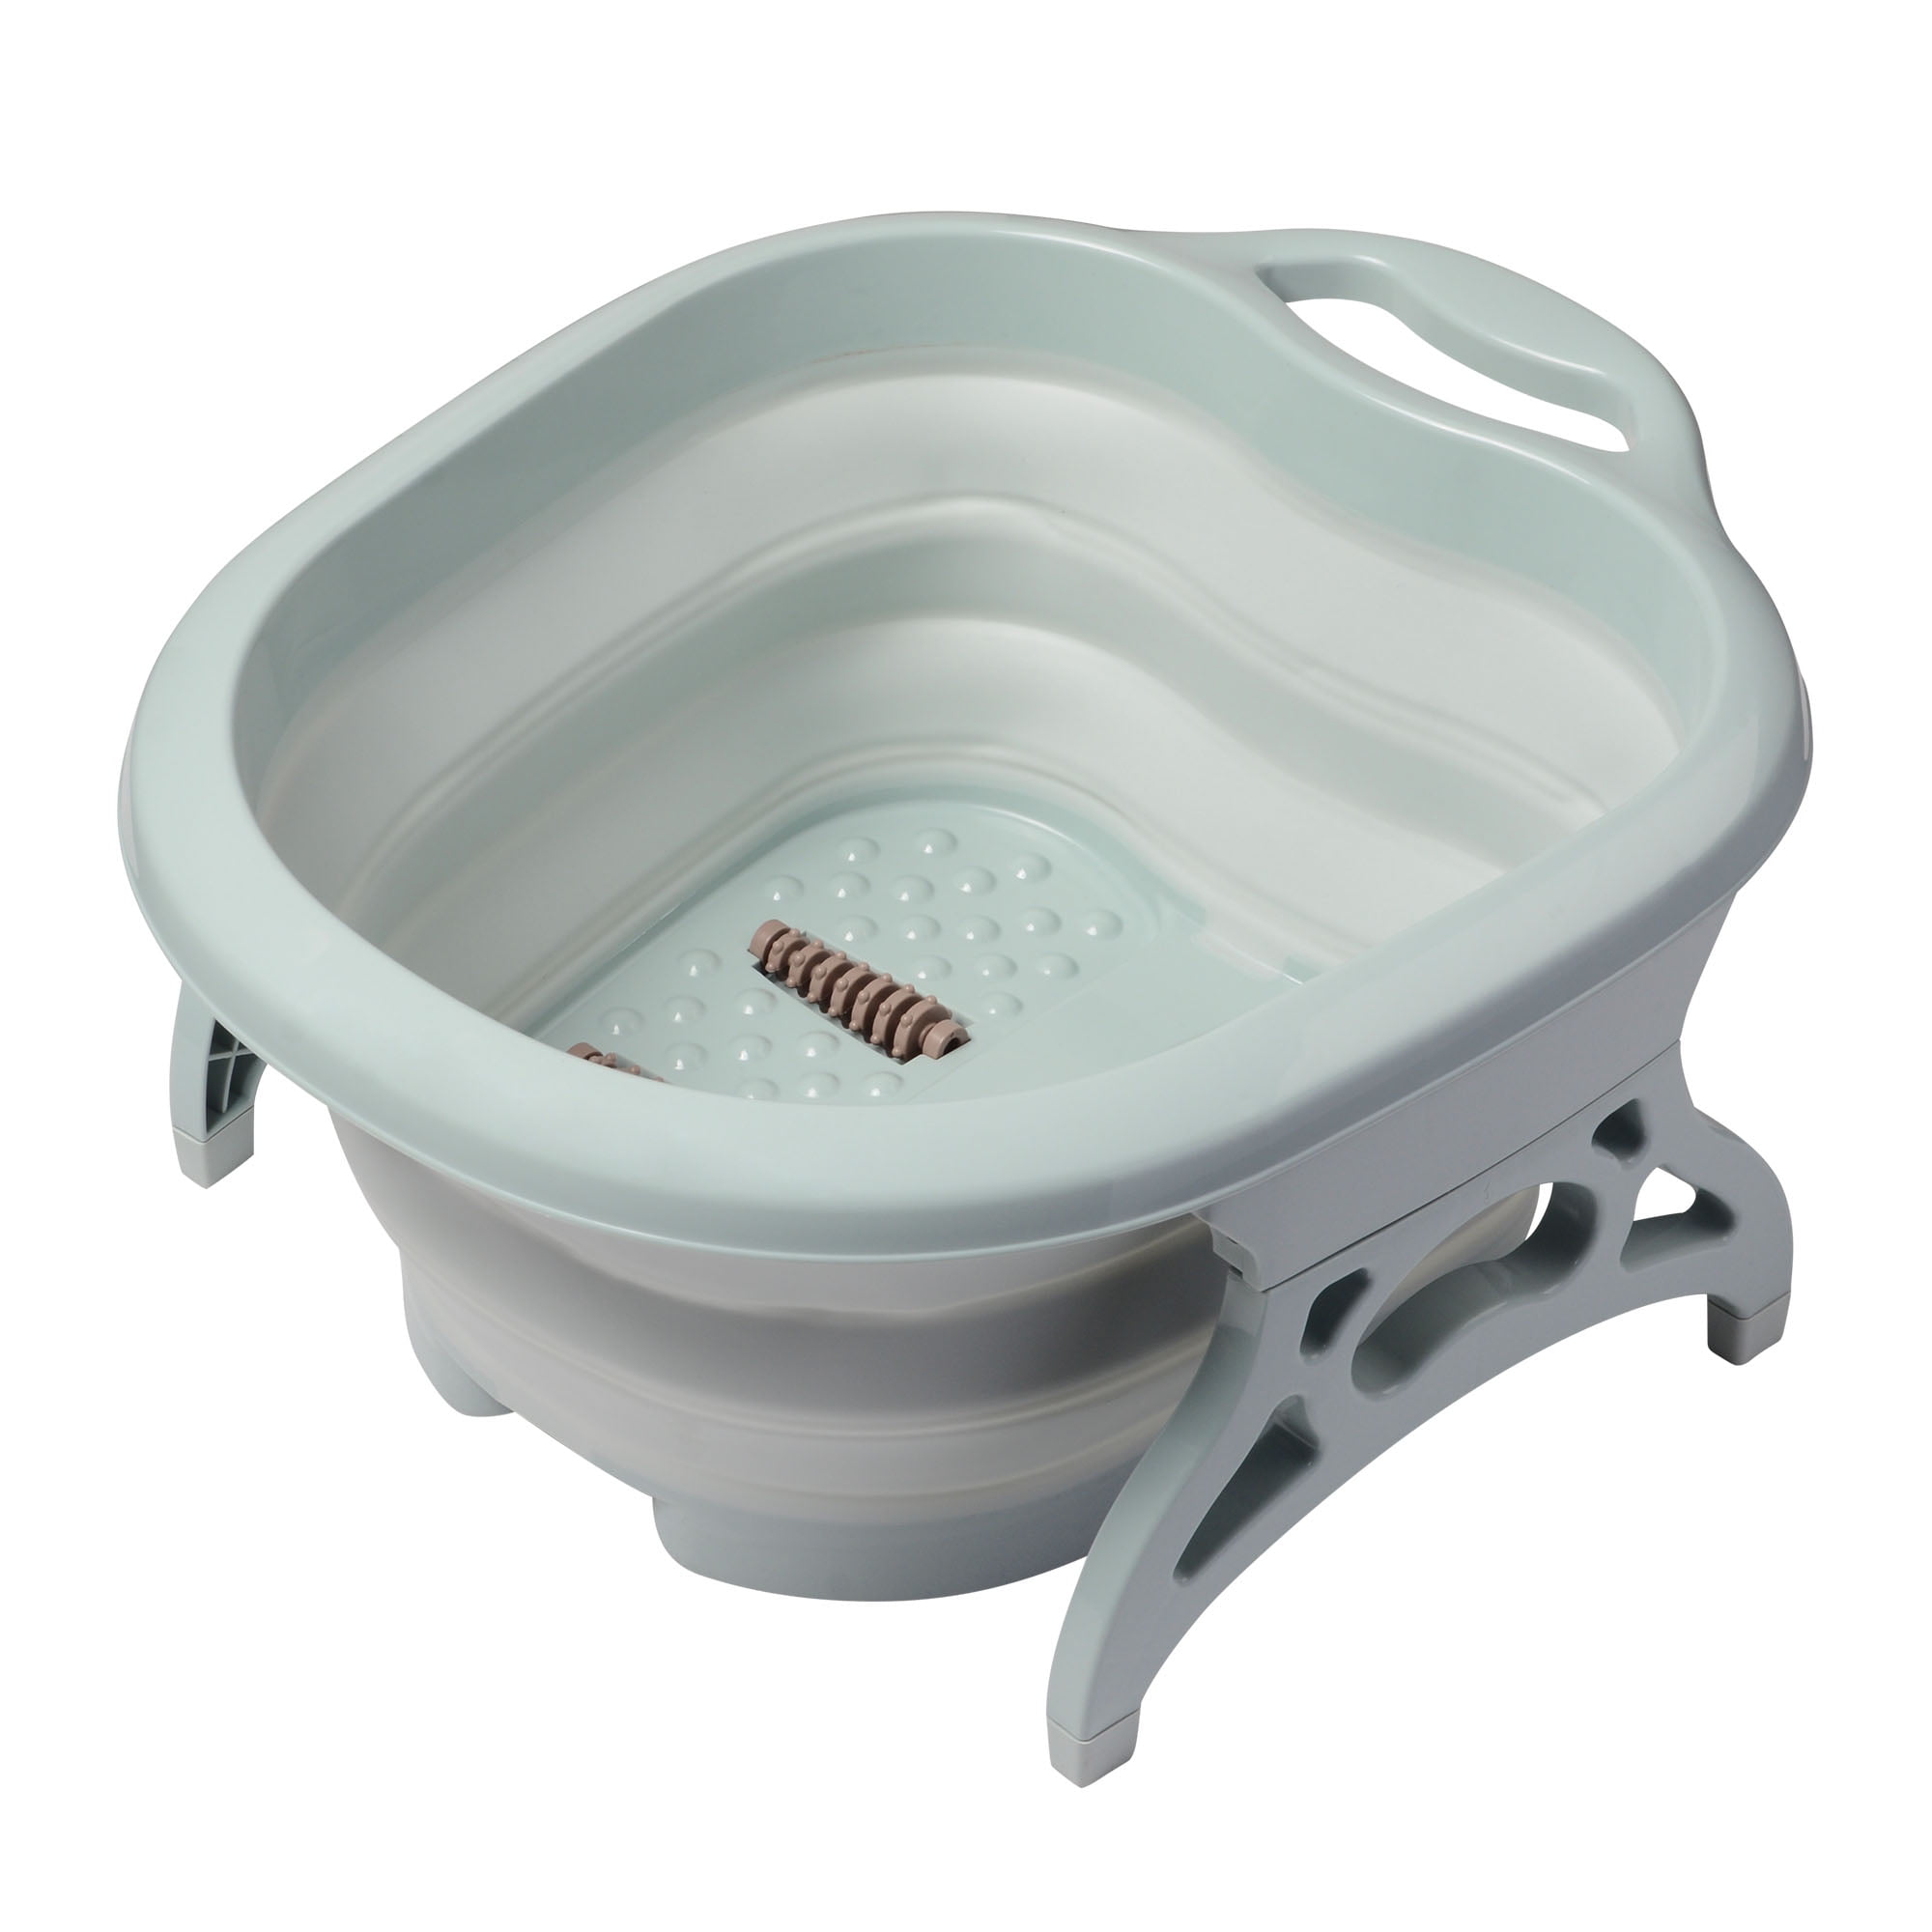 Yescom Dual User Ionic Detox Foot Bath Machine Kit with Arrays